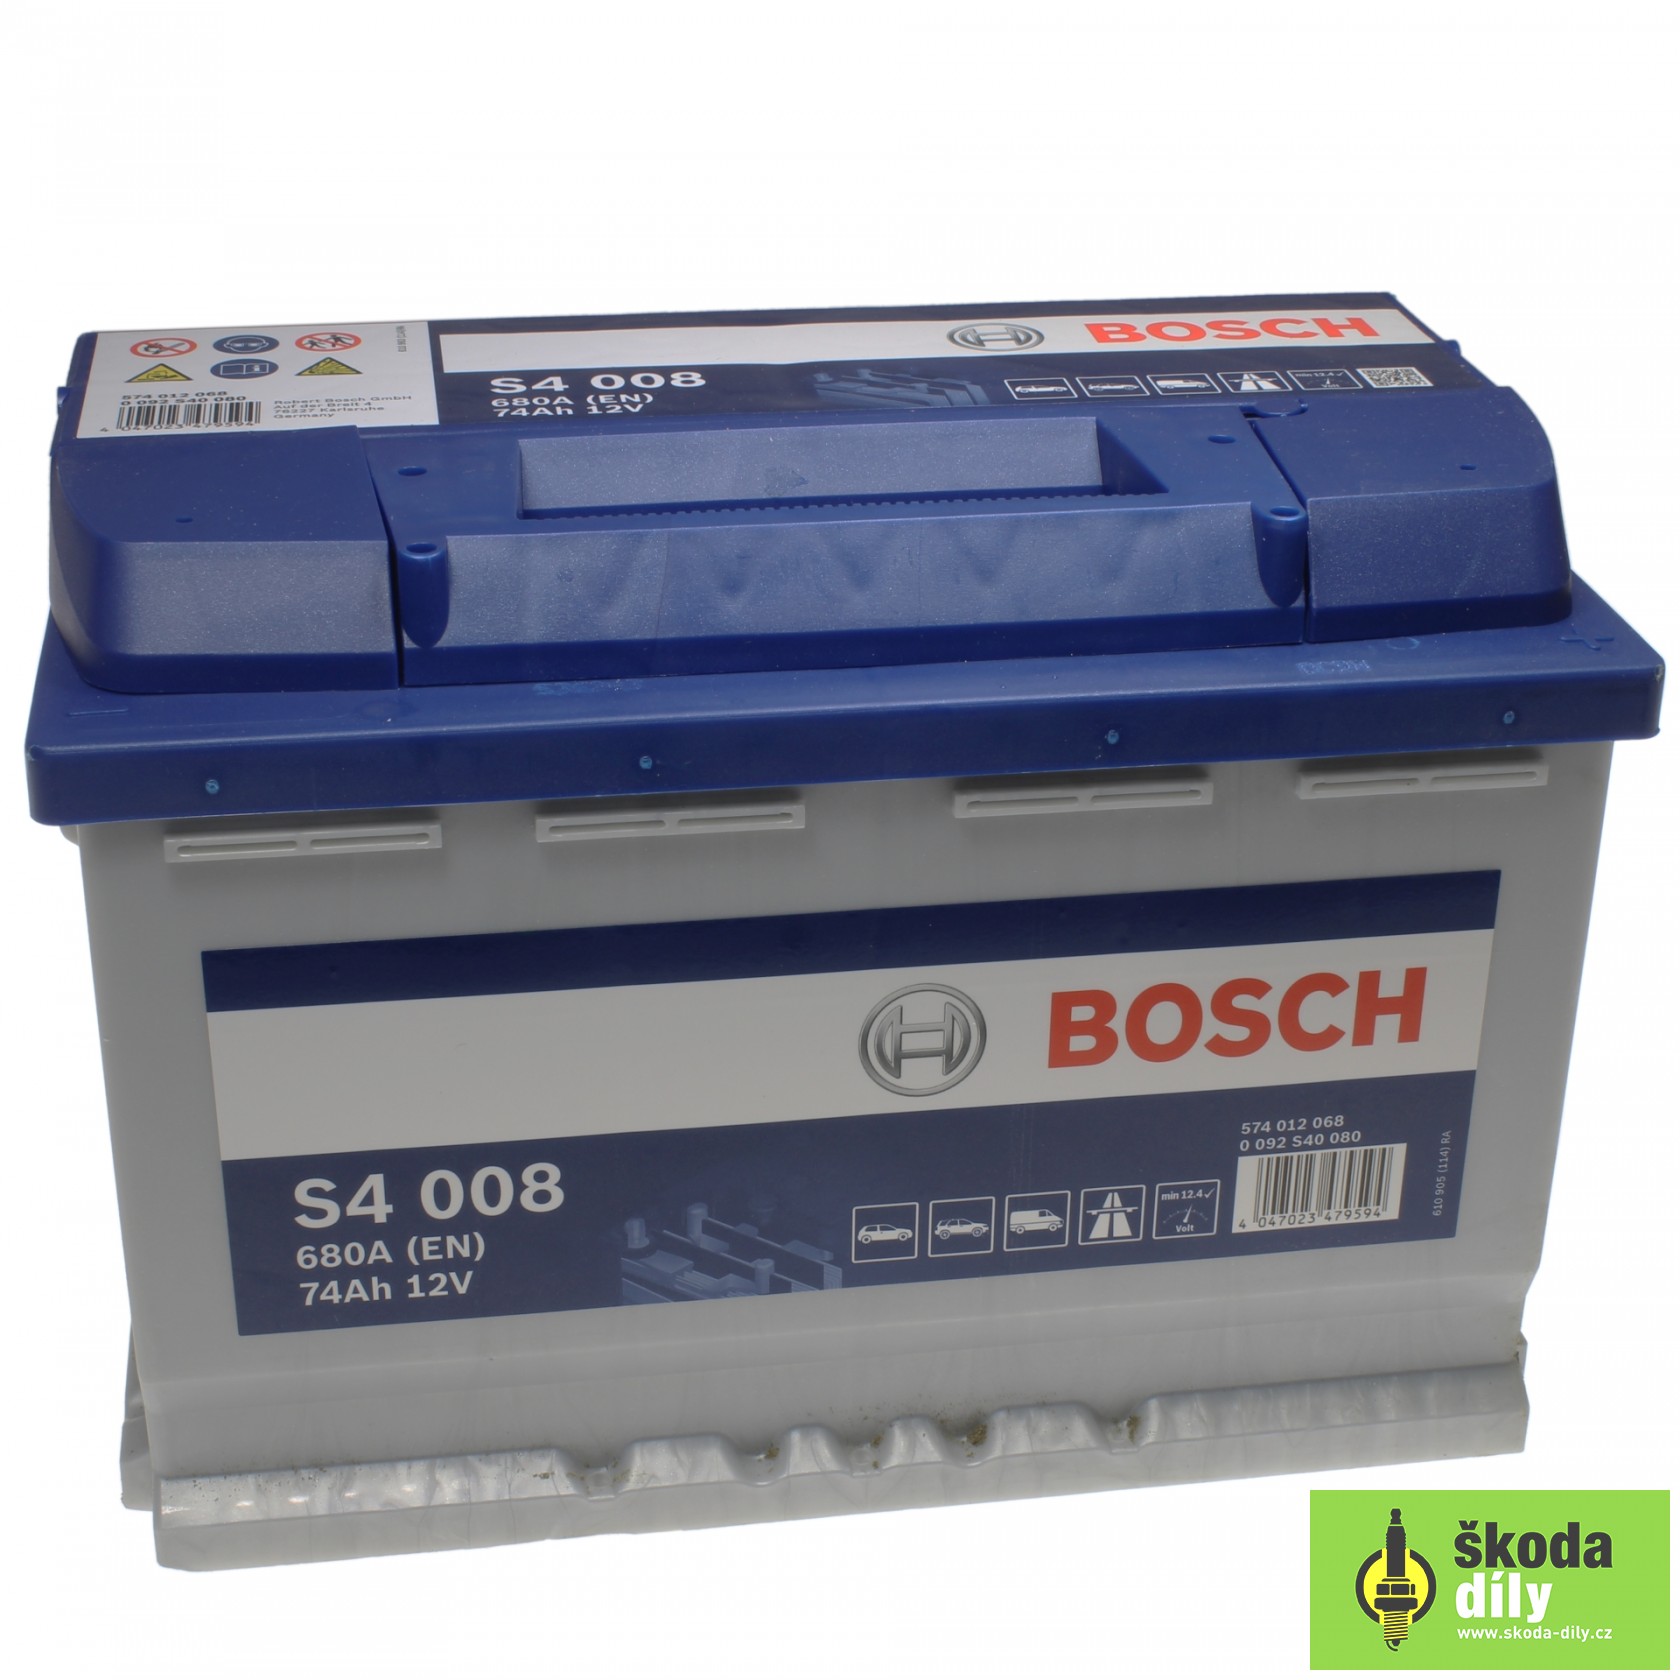 Bosch 12V 74AH Car Battery - Dew Limited